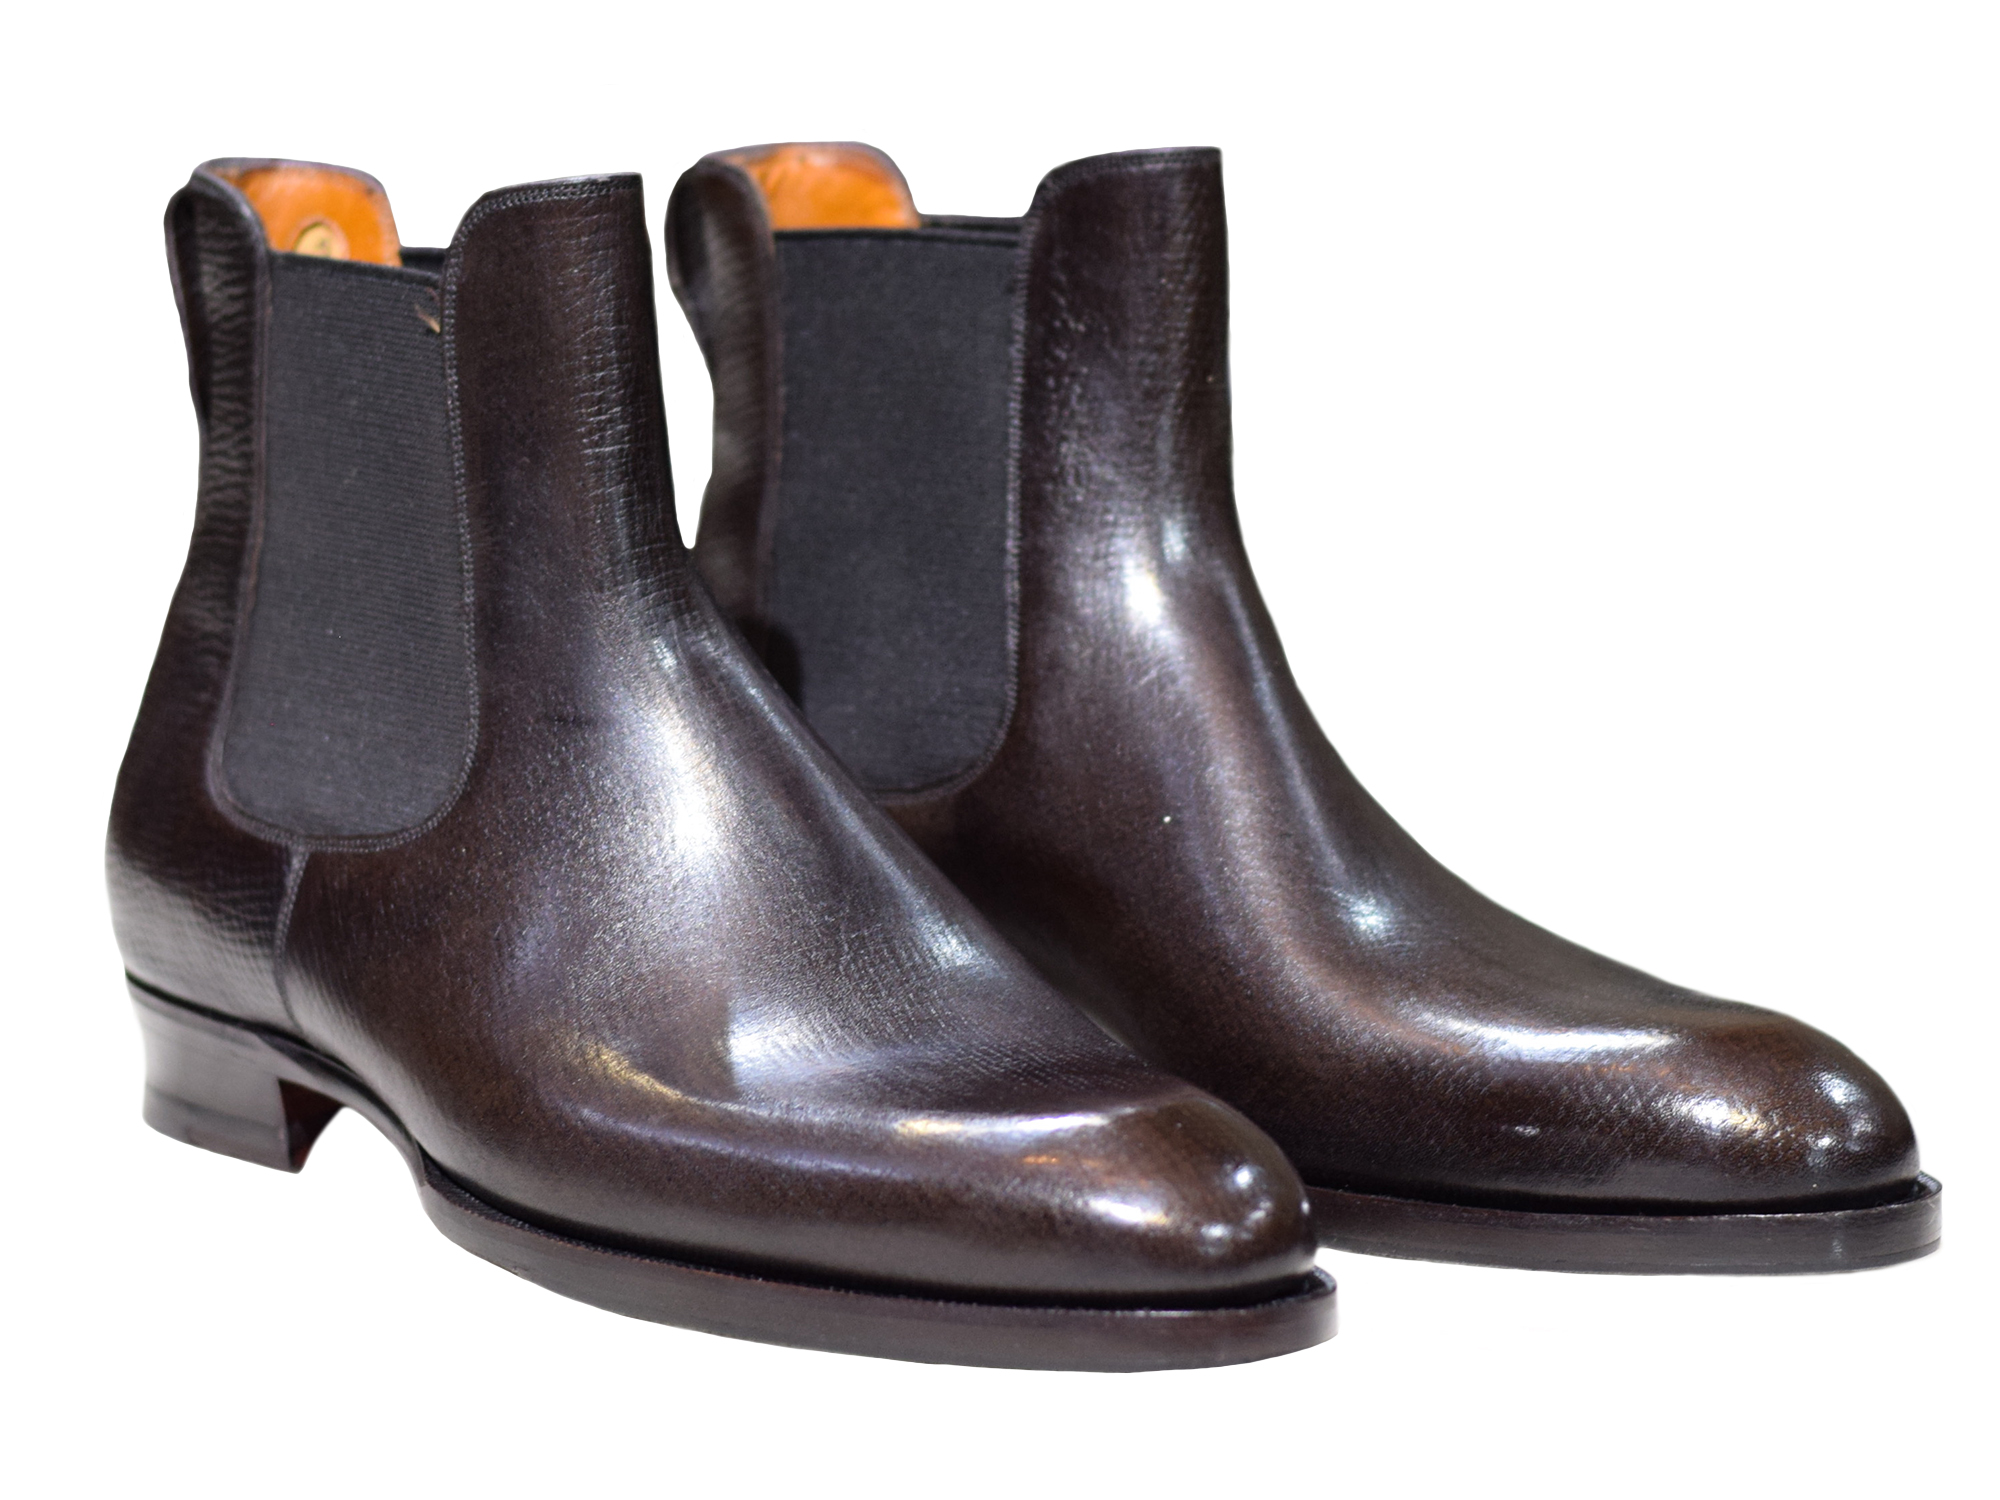 MTO Chelsea boots - Hatchgrain leather